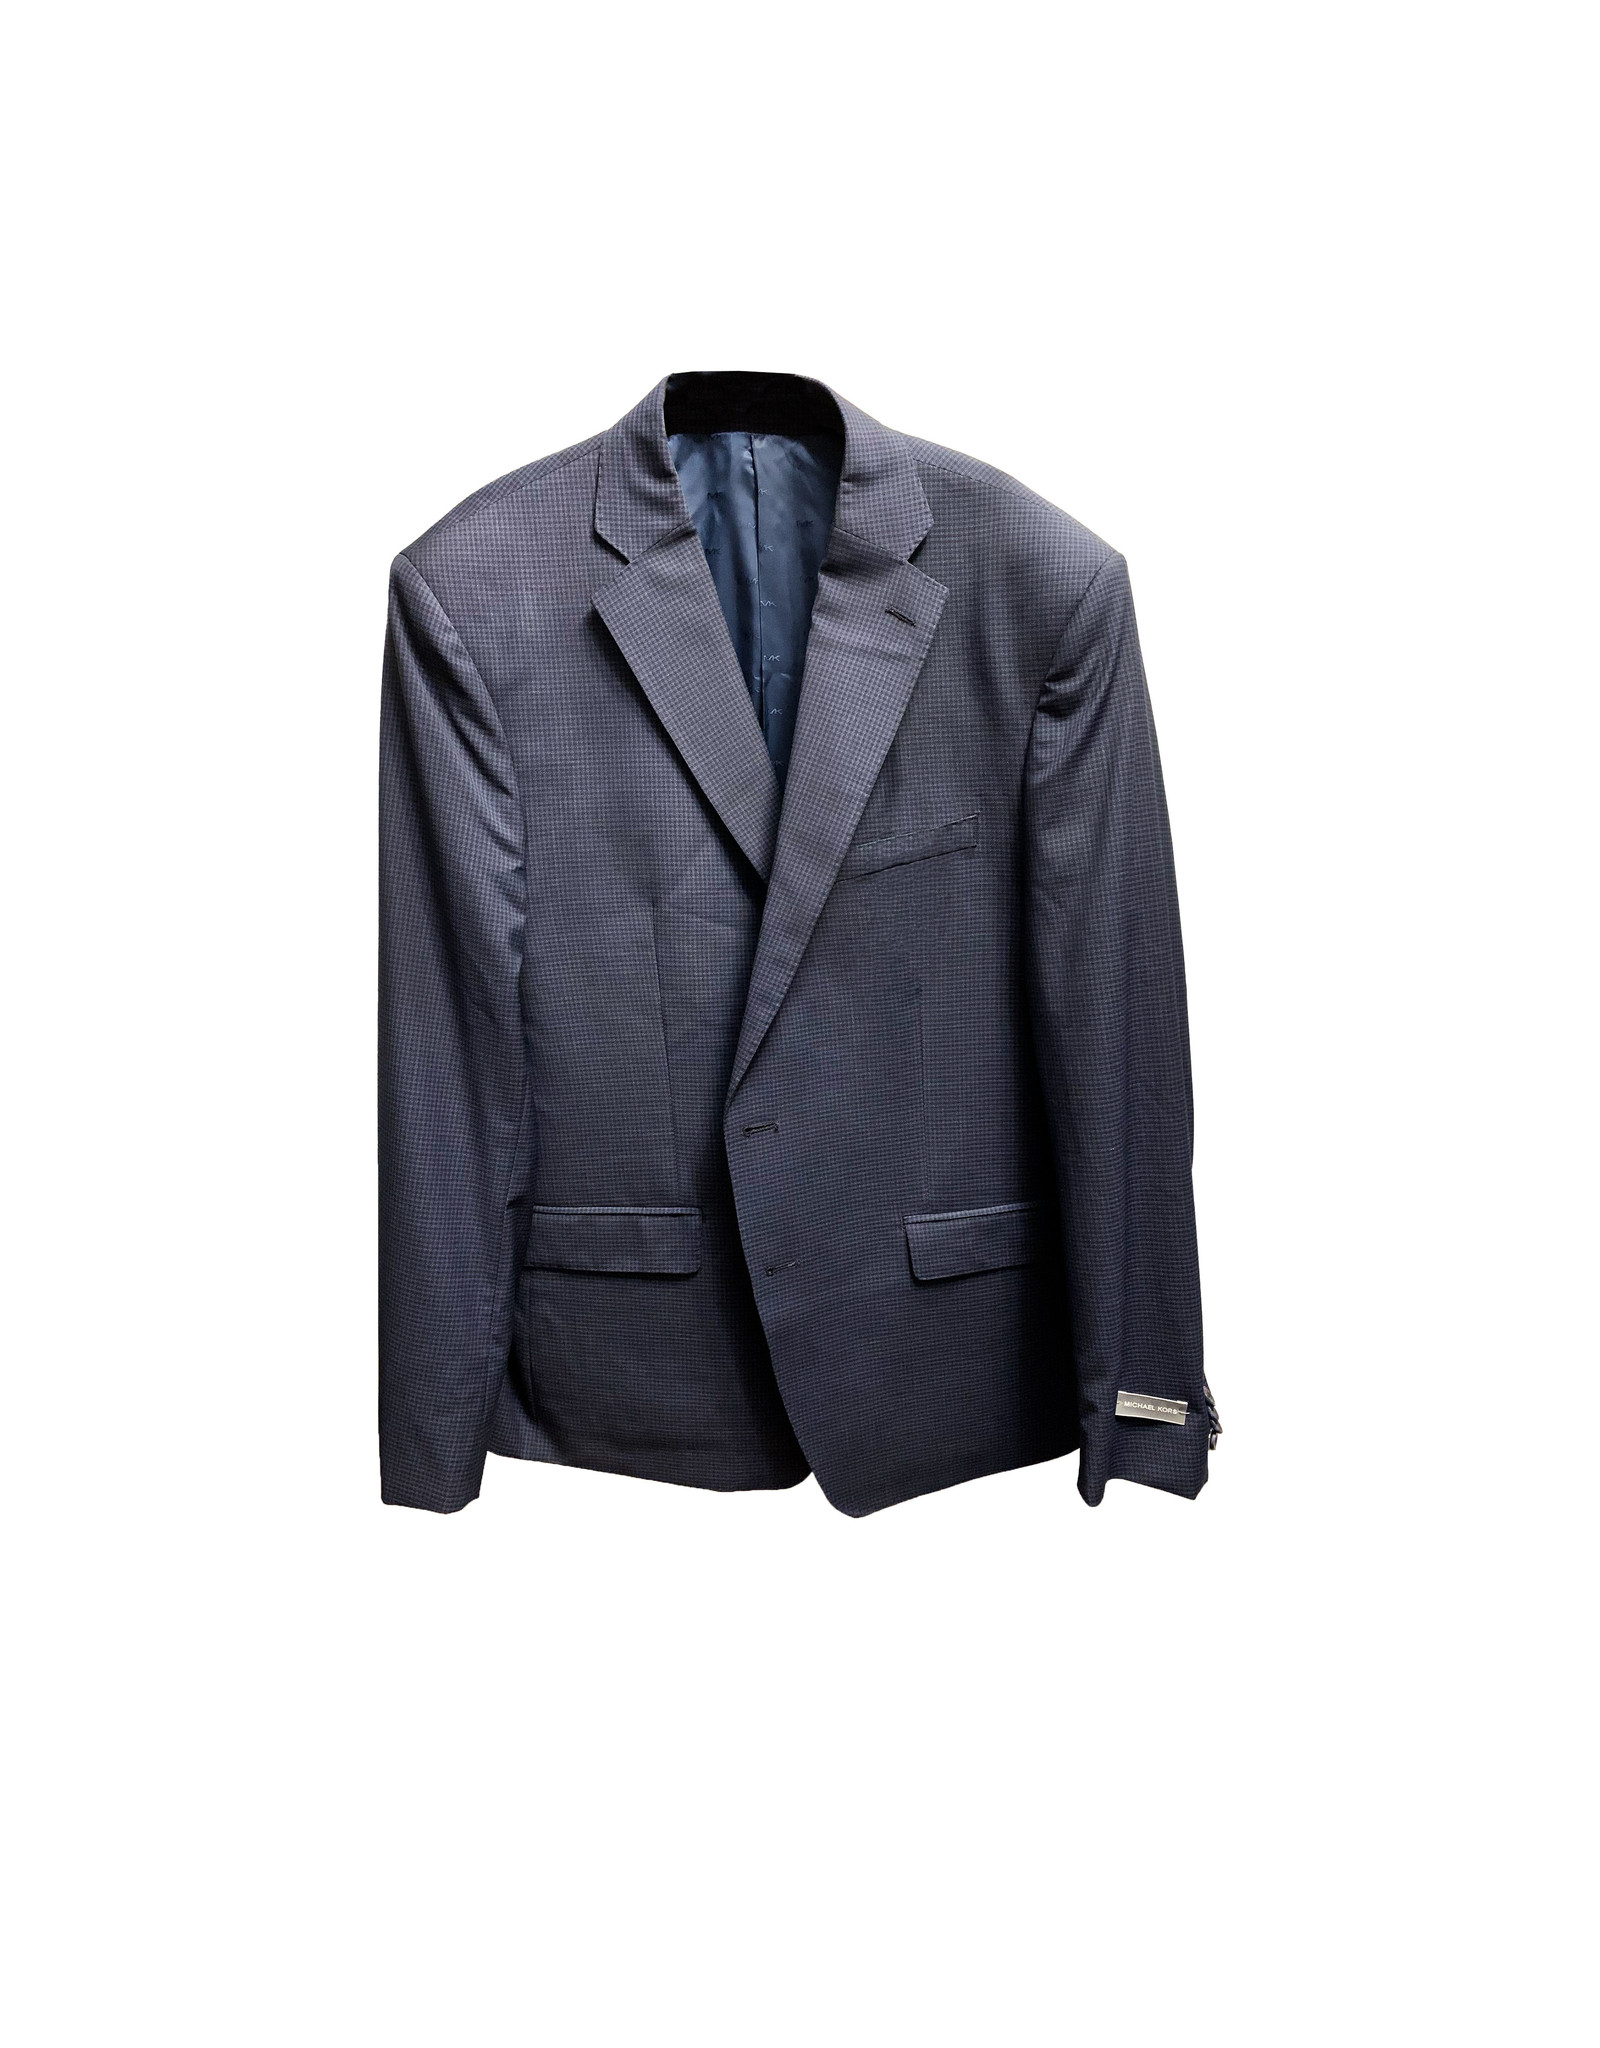 Michael Kors Michael Kors Wool-Blend Slim Fit Sports Jacket Size: 46R